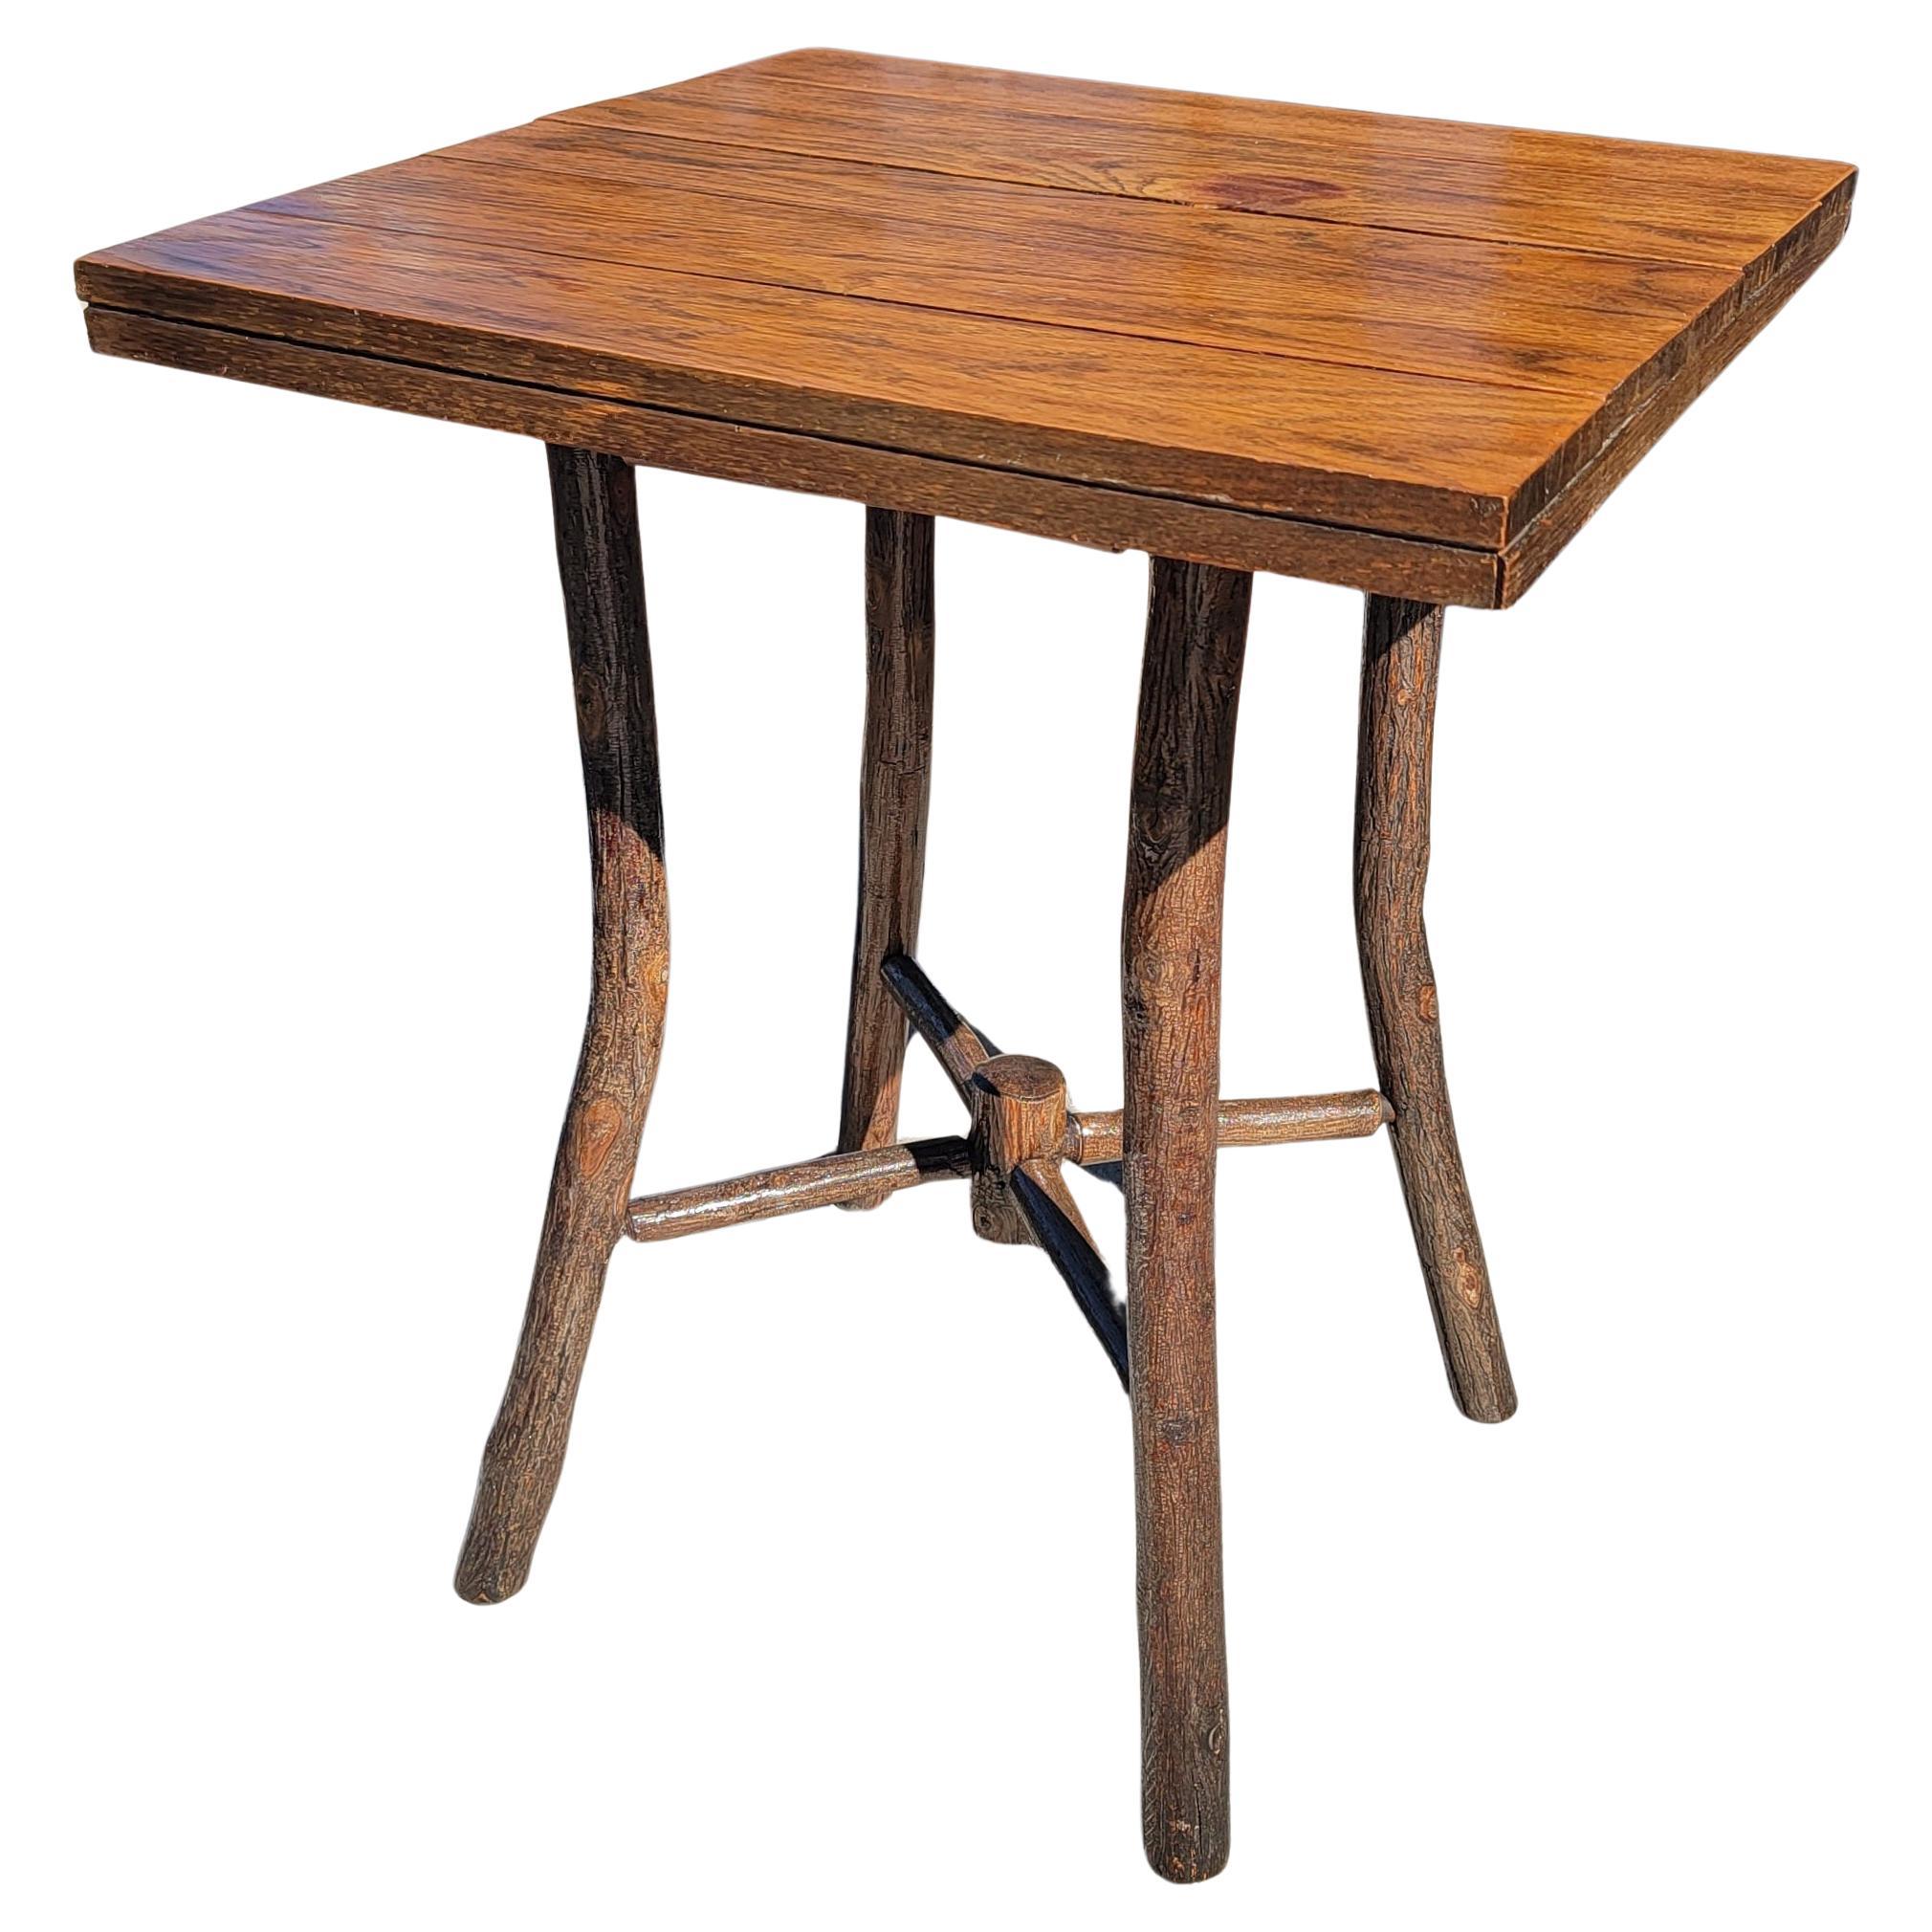 Table d'appoint Old Hickory avec Old Hickory Co. Étiquette en vente